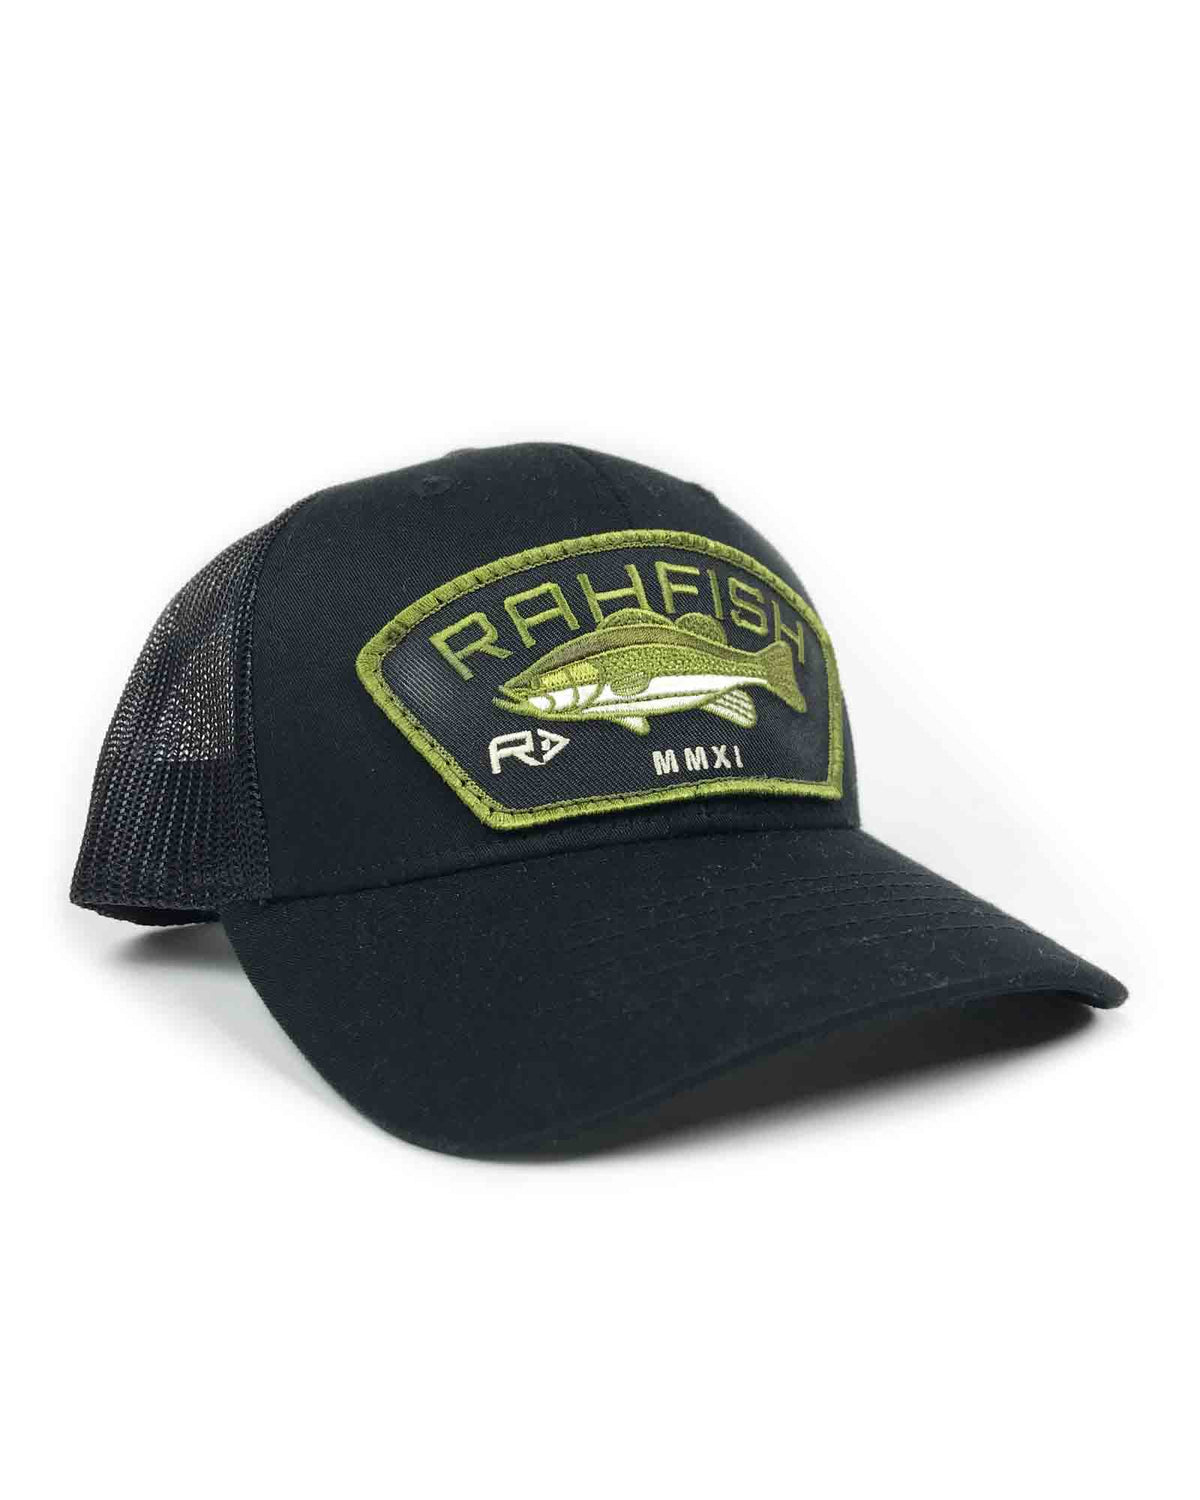 Rahfish LGB Trucker Hat - Black